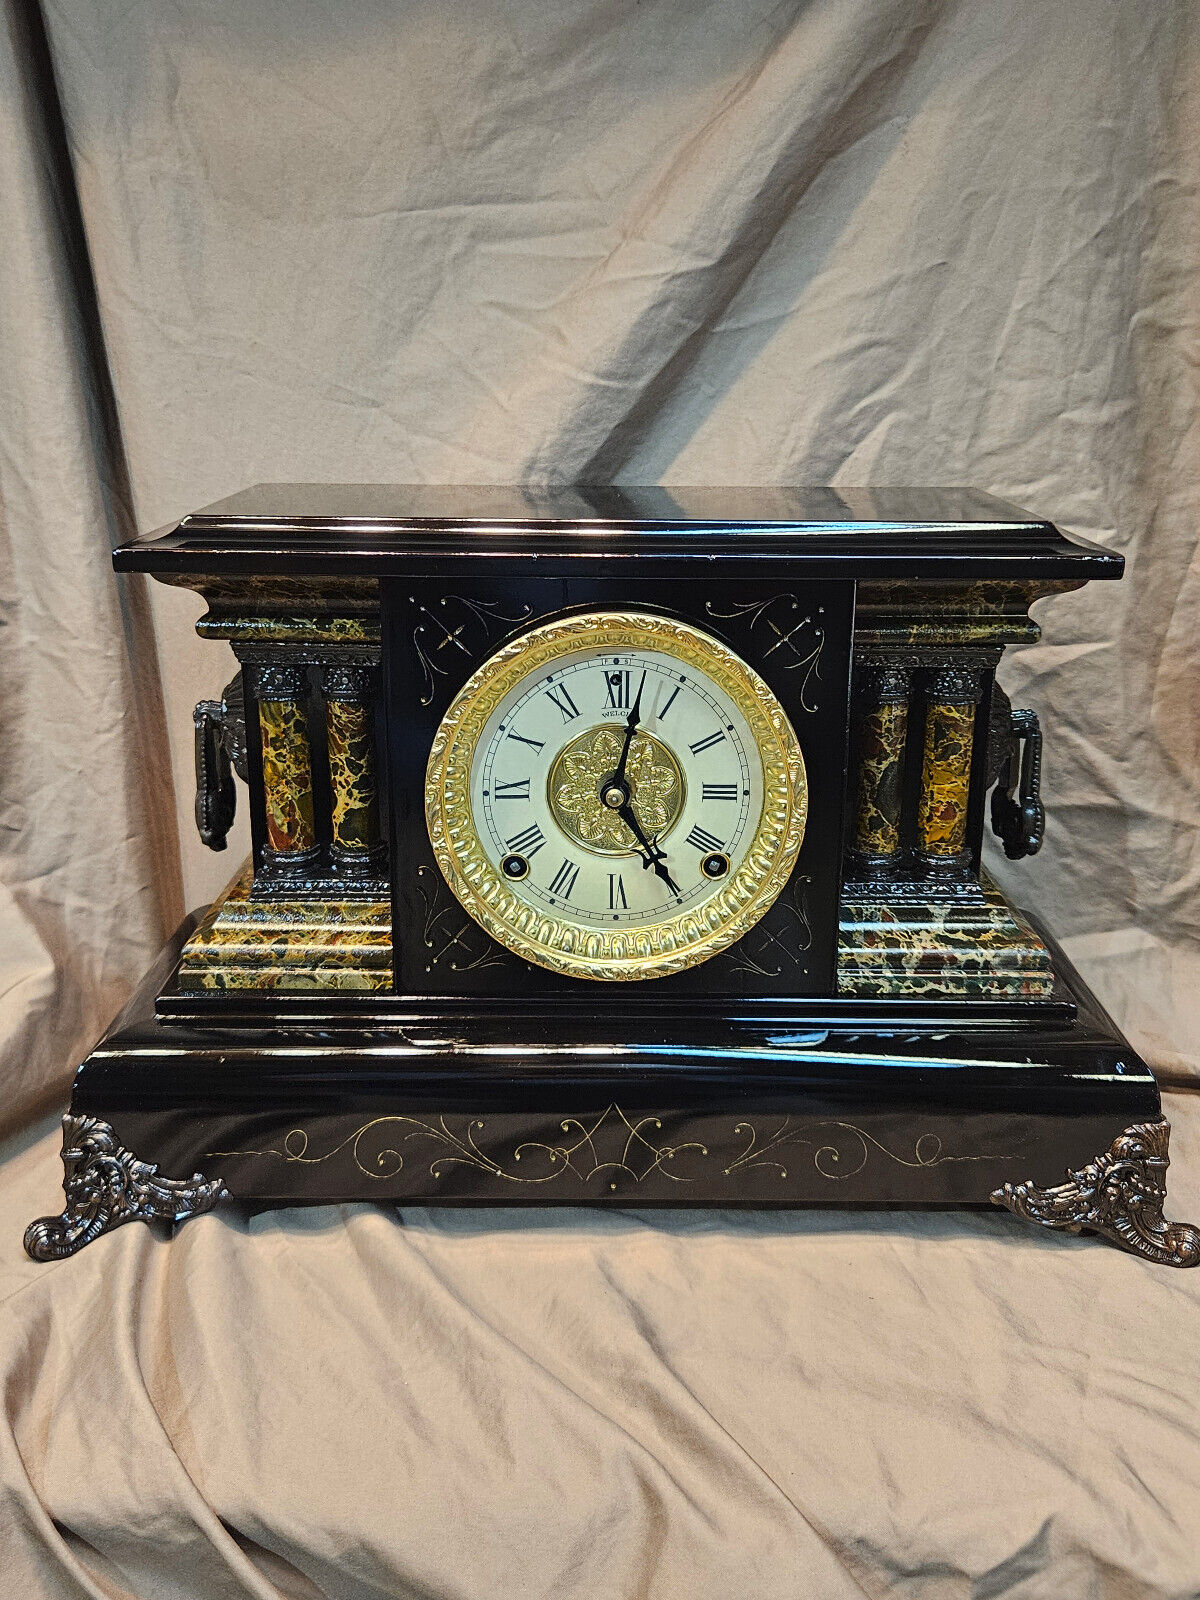 Restored Antique E. N. Welch Mantel Clock circa 1890s Original Movement